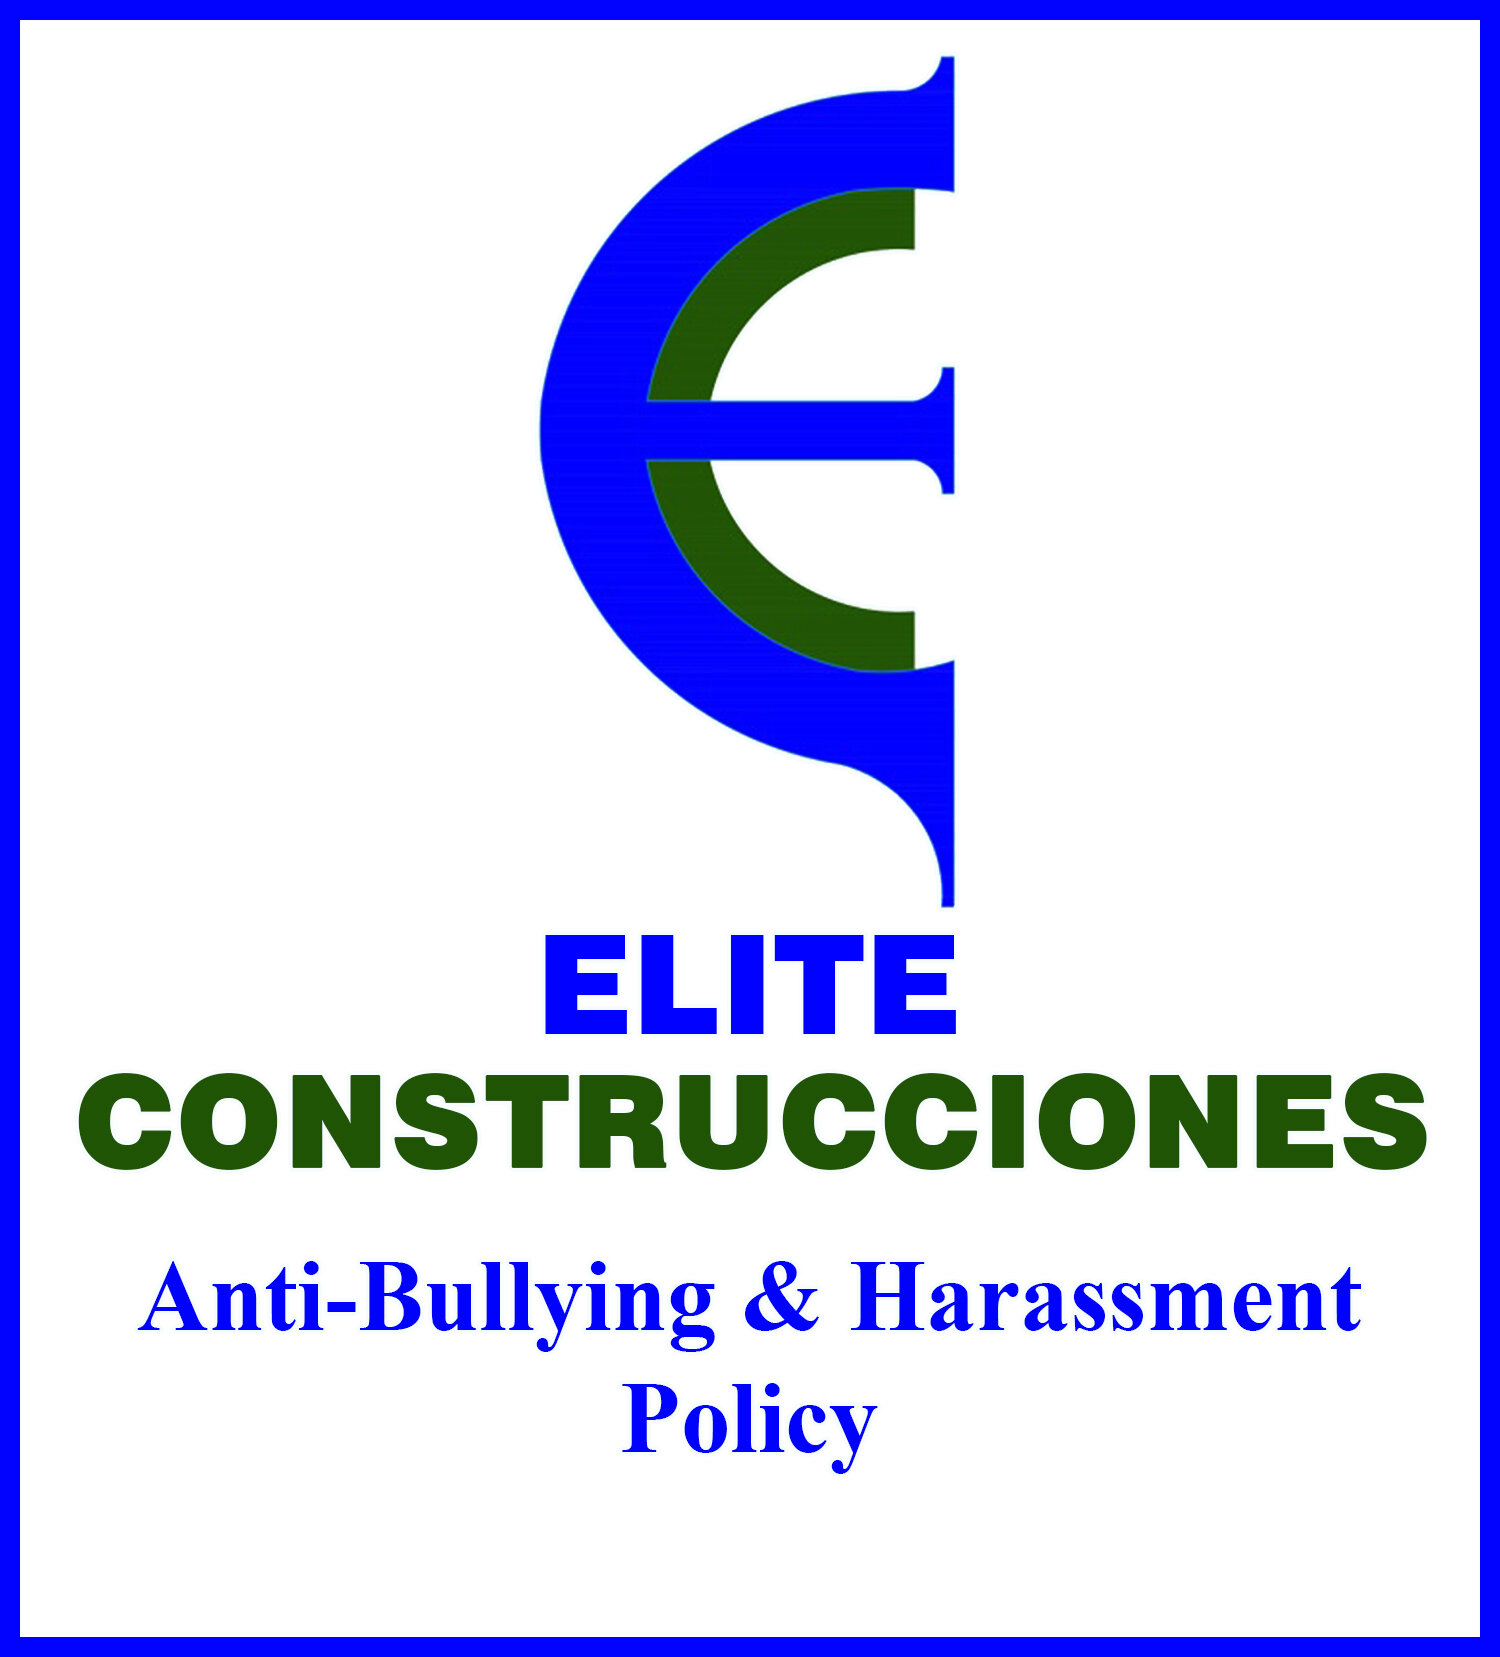 Anti-Bullying & Harassment Policy English.jpg